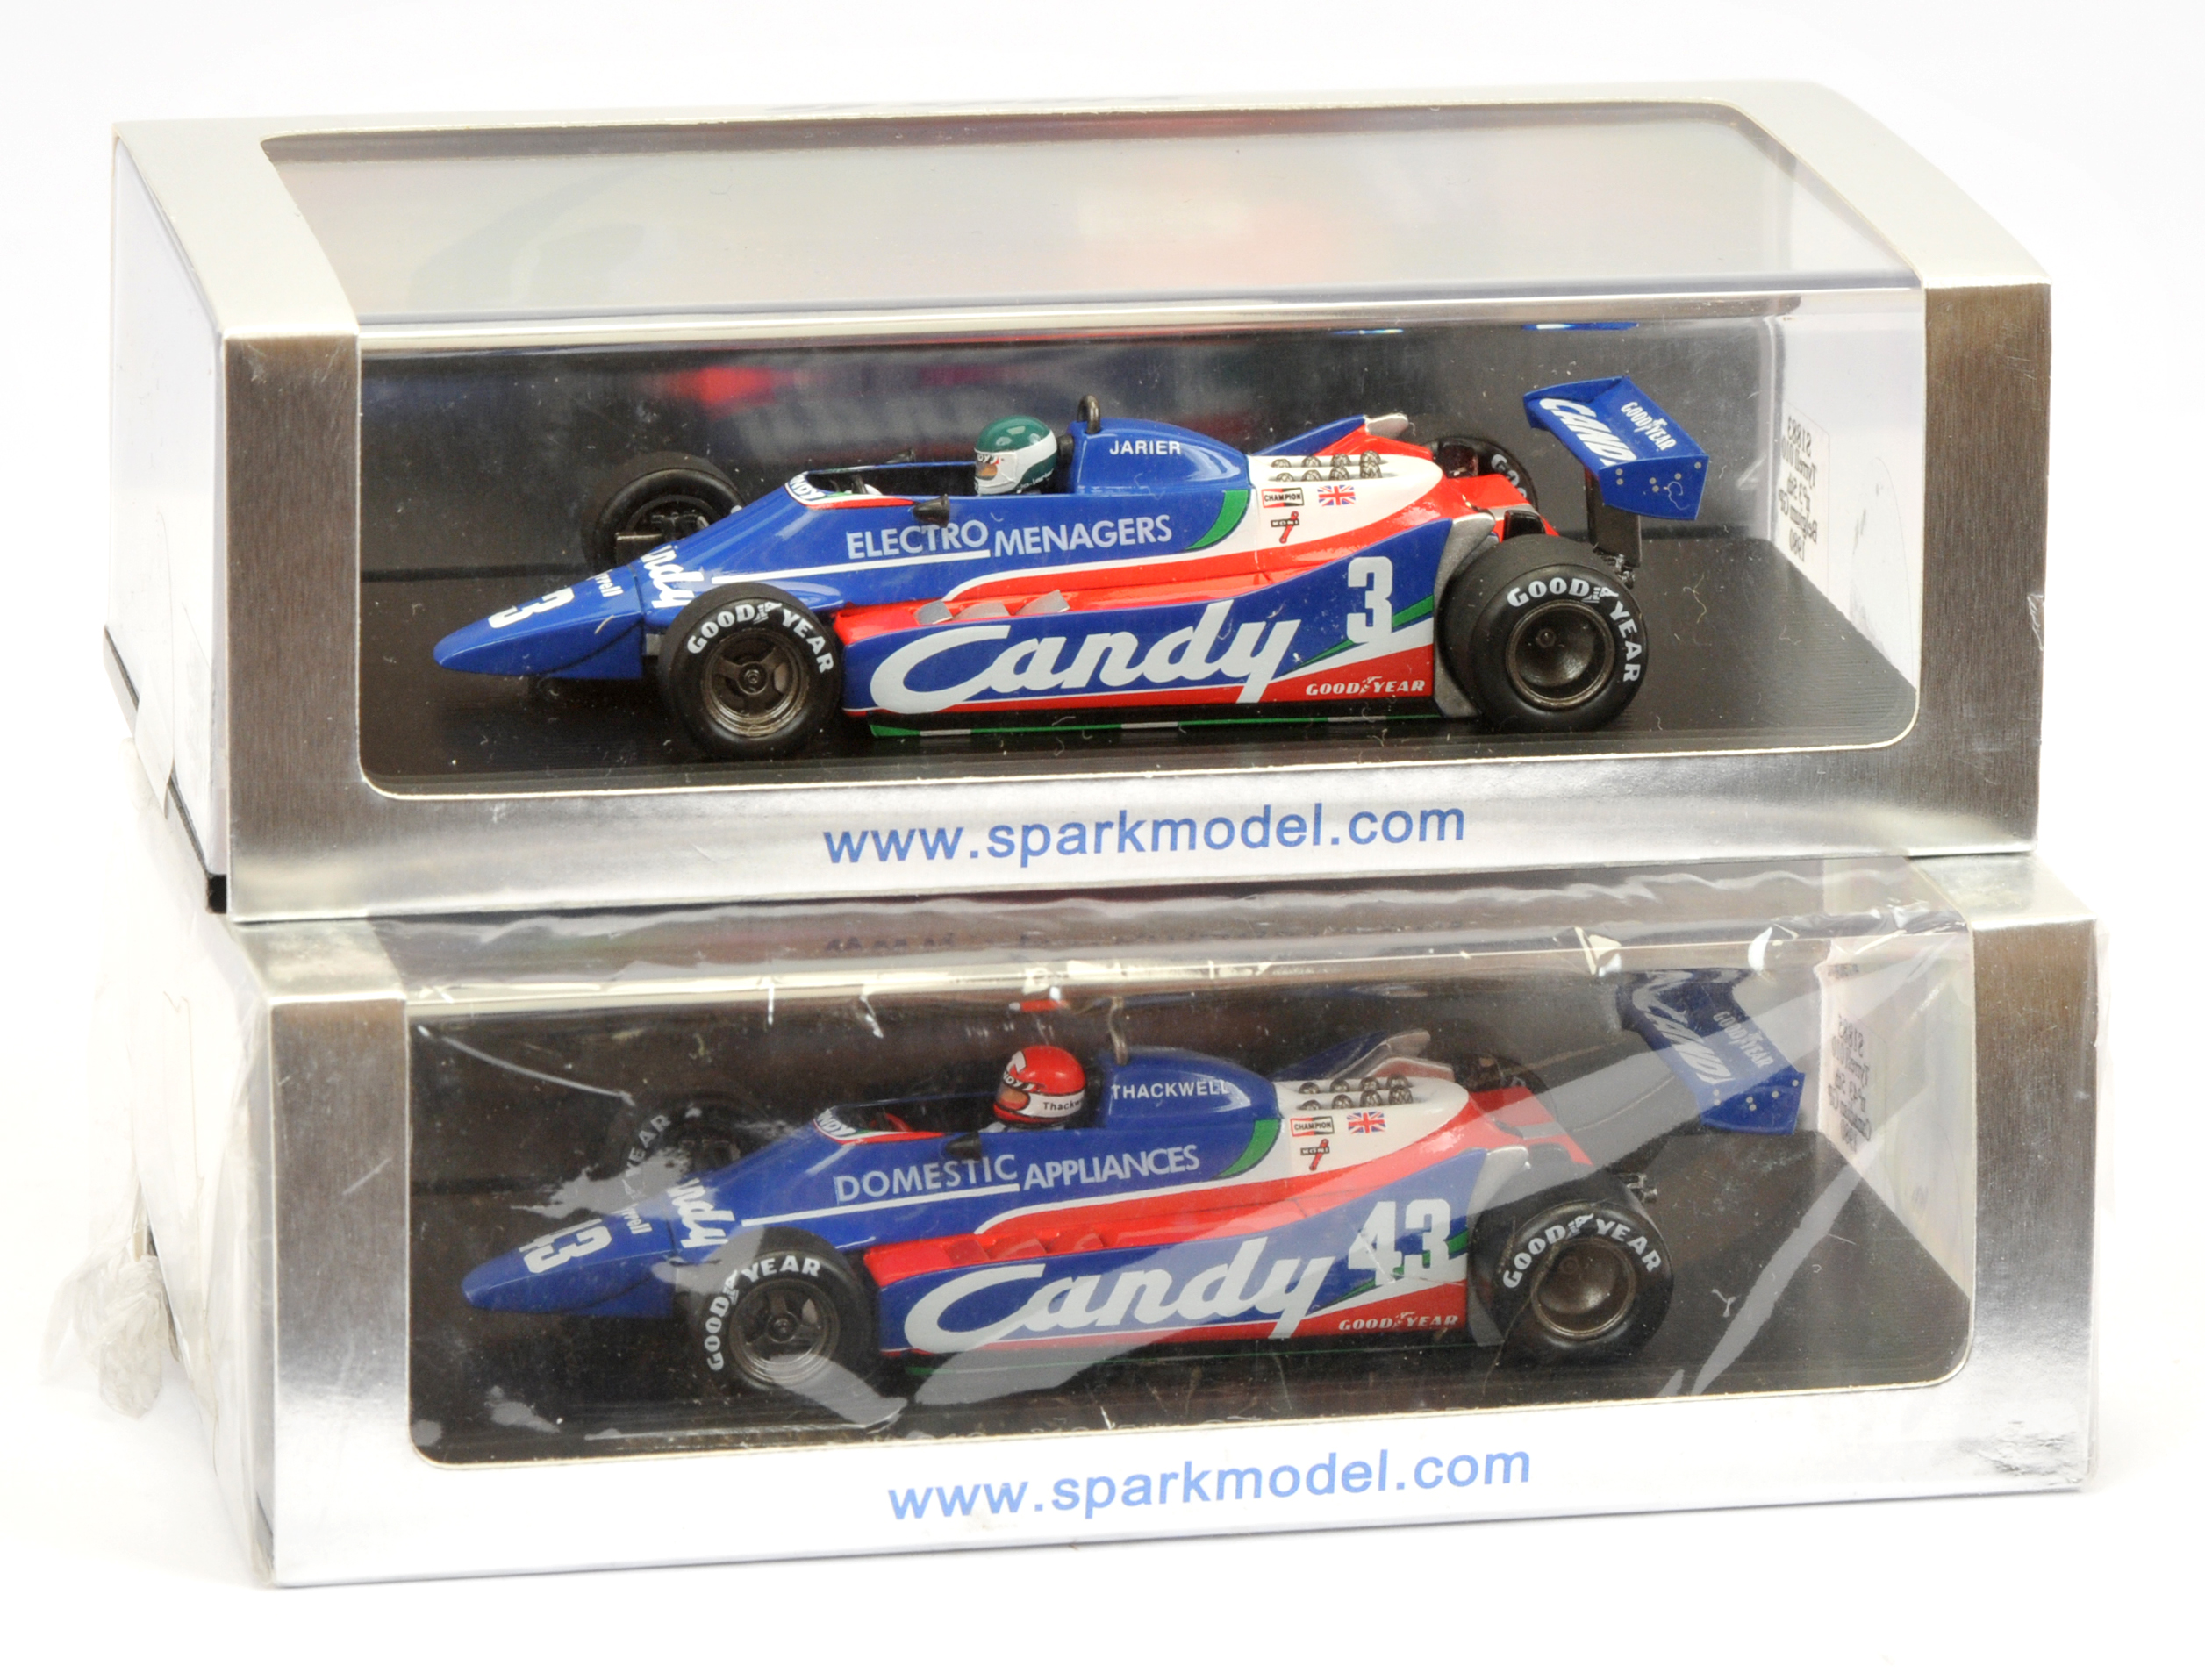 Pair of Spark racing models scale 1:43 S1883 Tyrrell 010 Belgium GP 1980